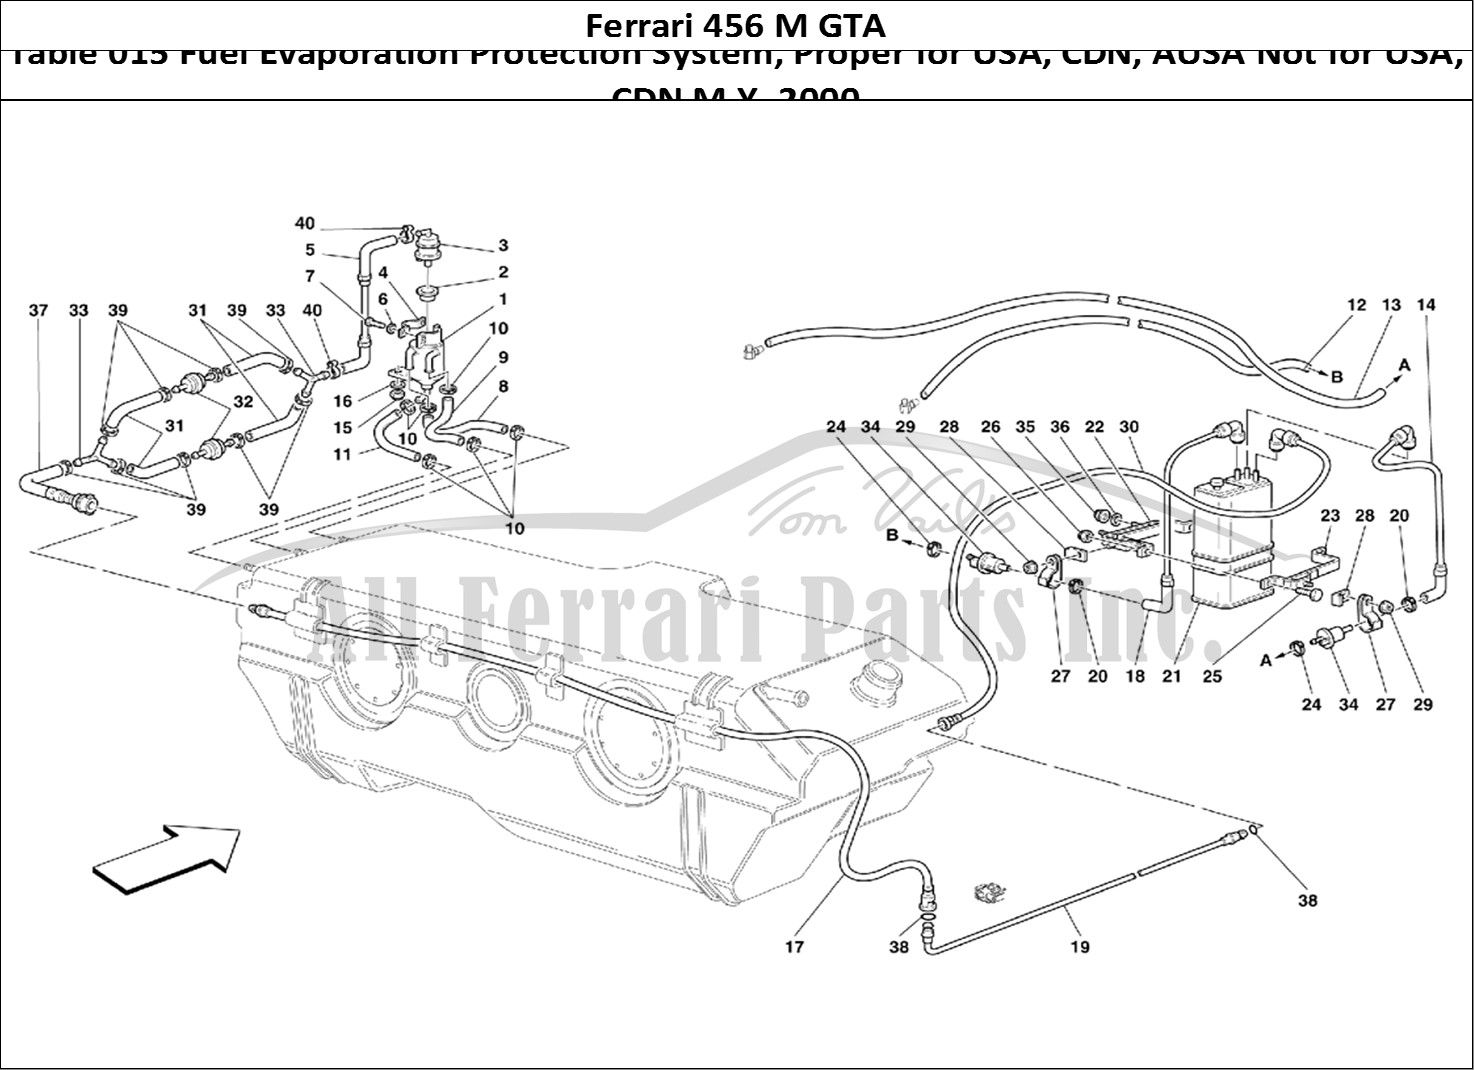 Ferrari Parts Ferrari 456 M GT Page 015 Antievaporation Device -V